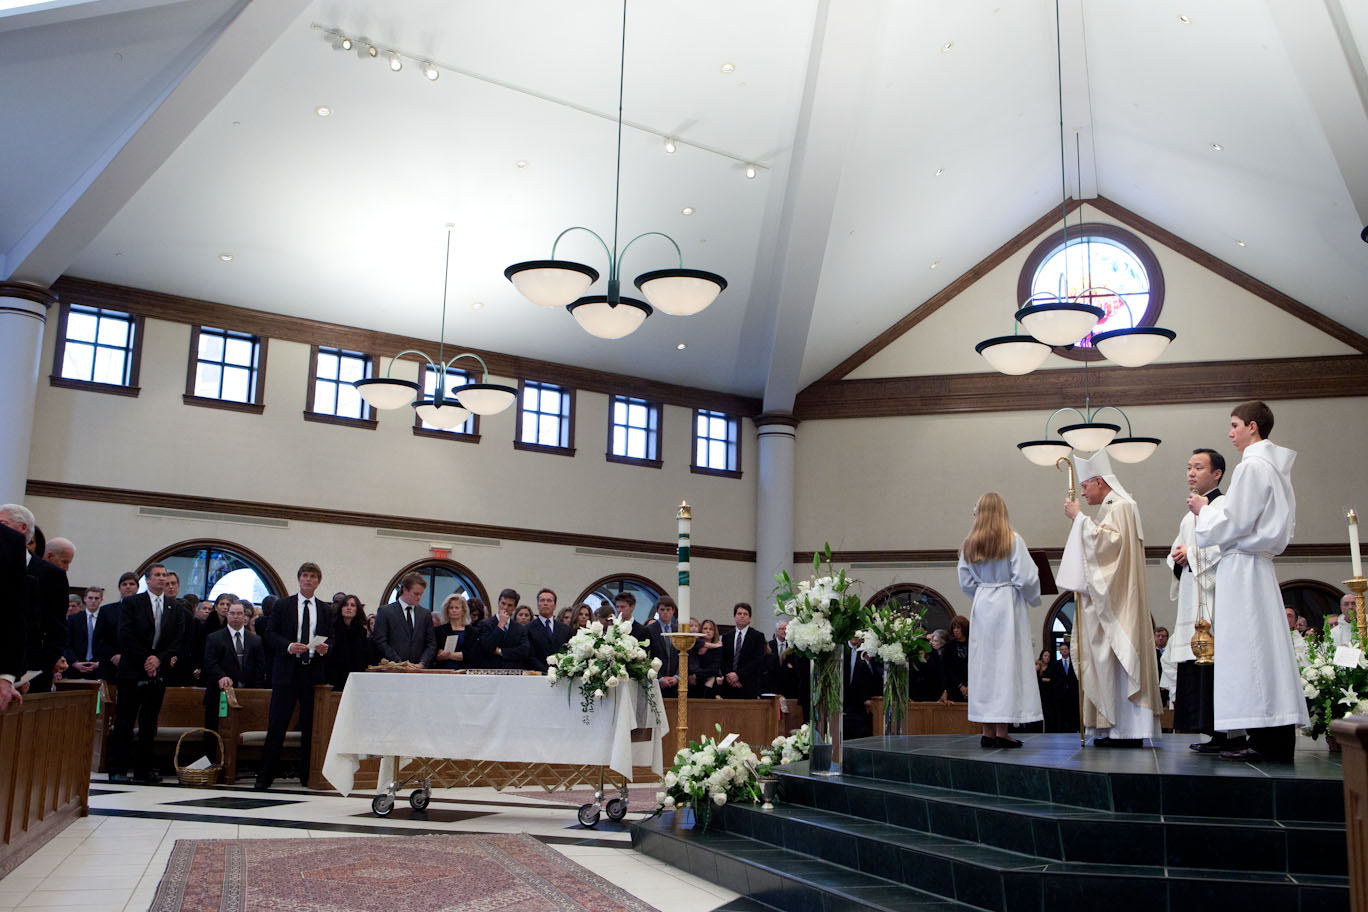 Funeral Mass for R. Sargent Shriver